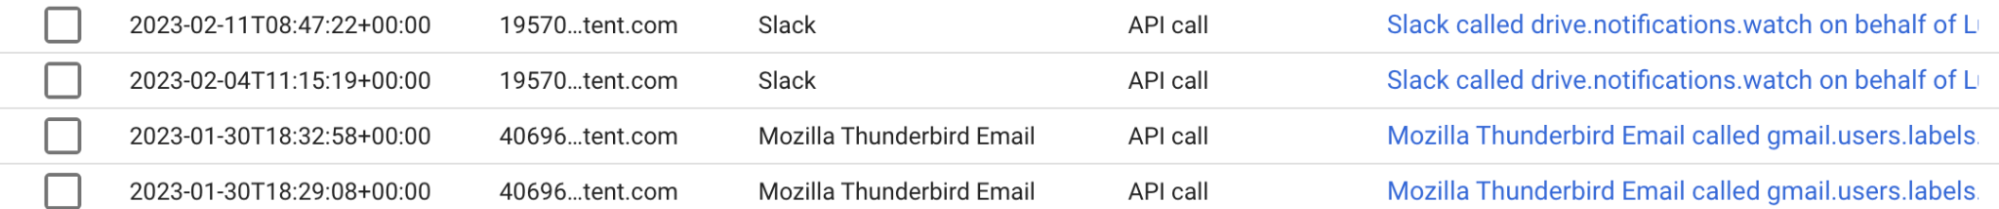 Activity log for Thunderbird email integration